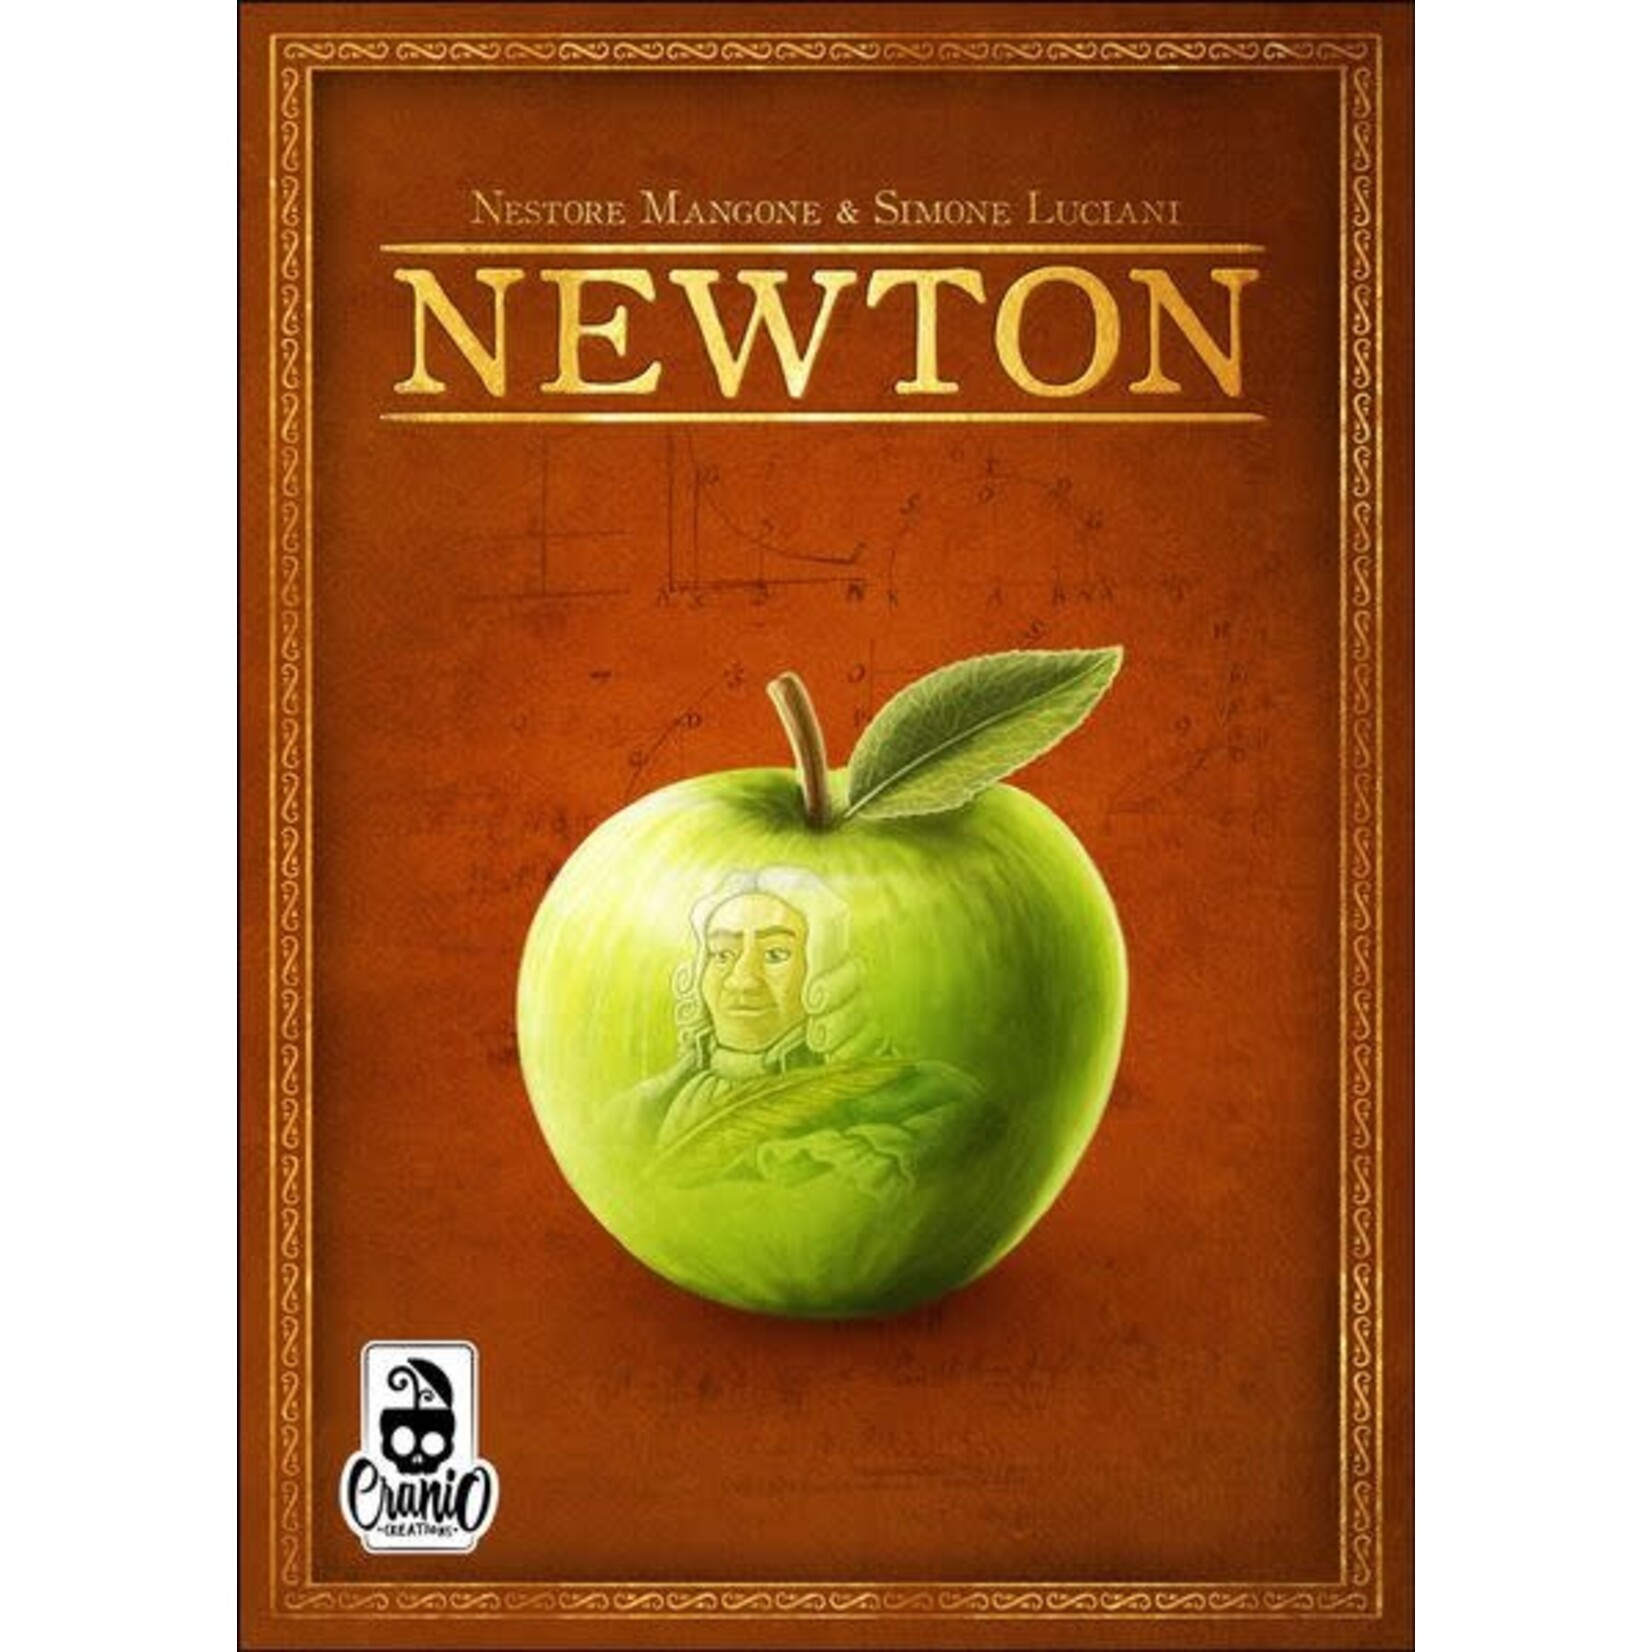 CMON Newton DEMO